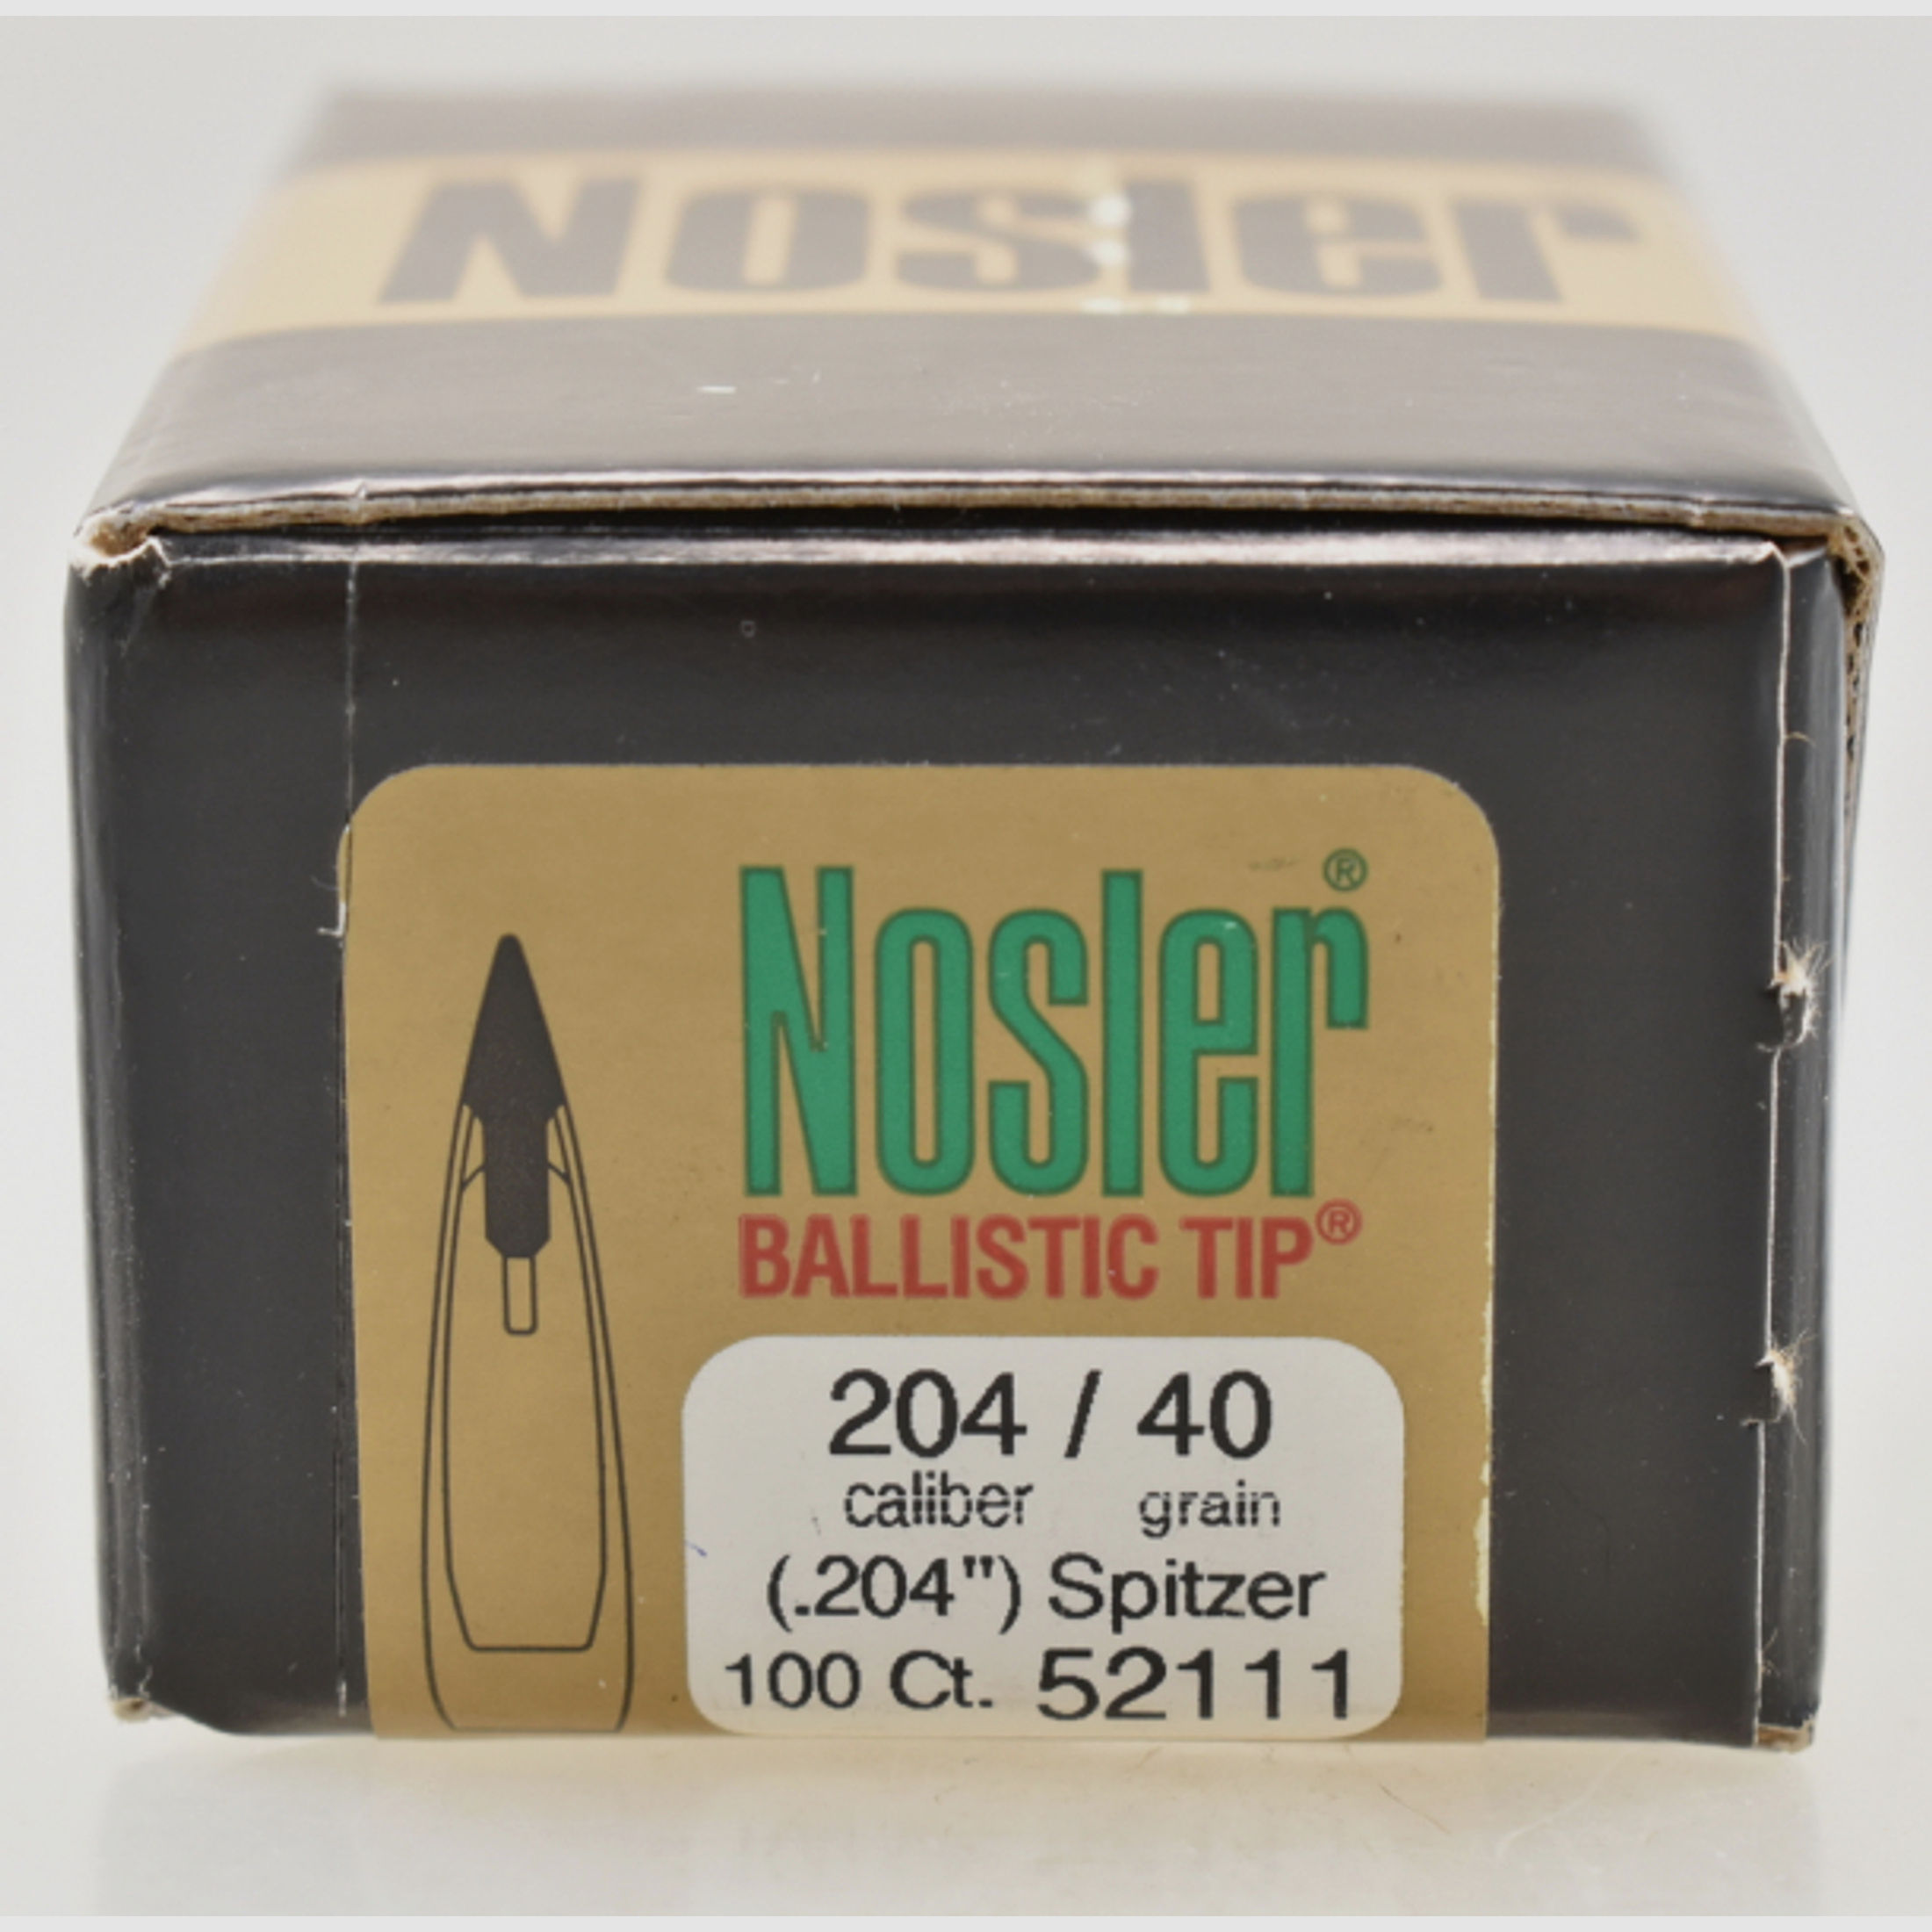 100 Nosler Geschosse Ballistic Tip .204 - 40gr. Spitzer #52111